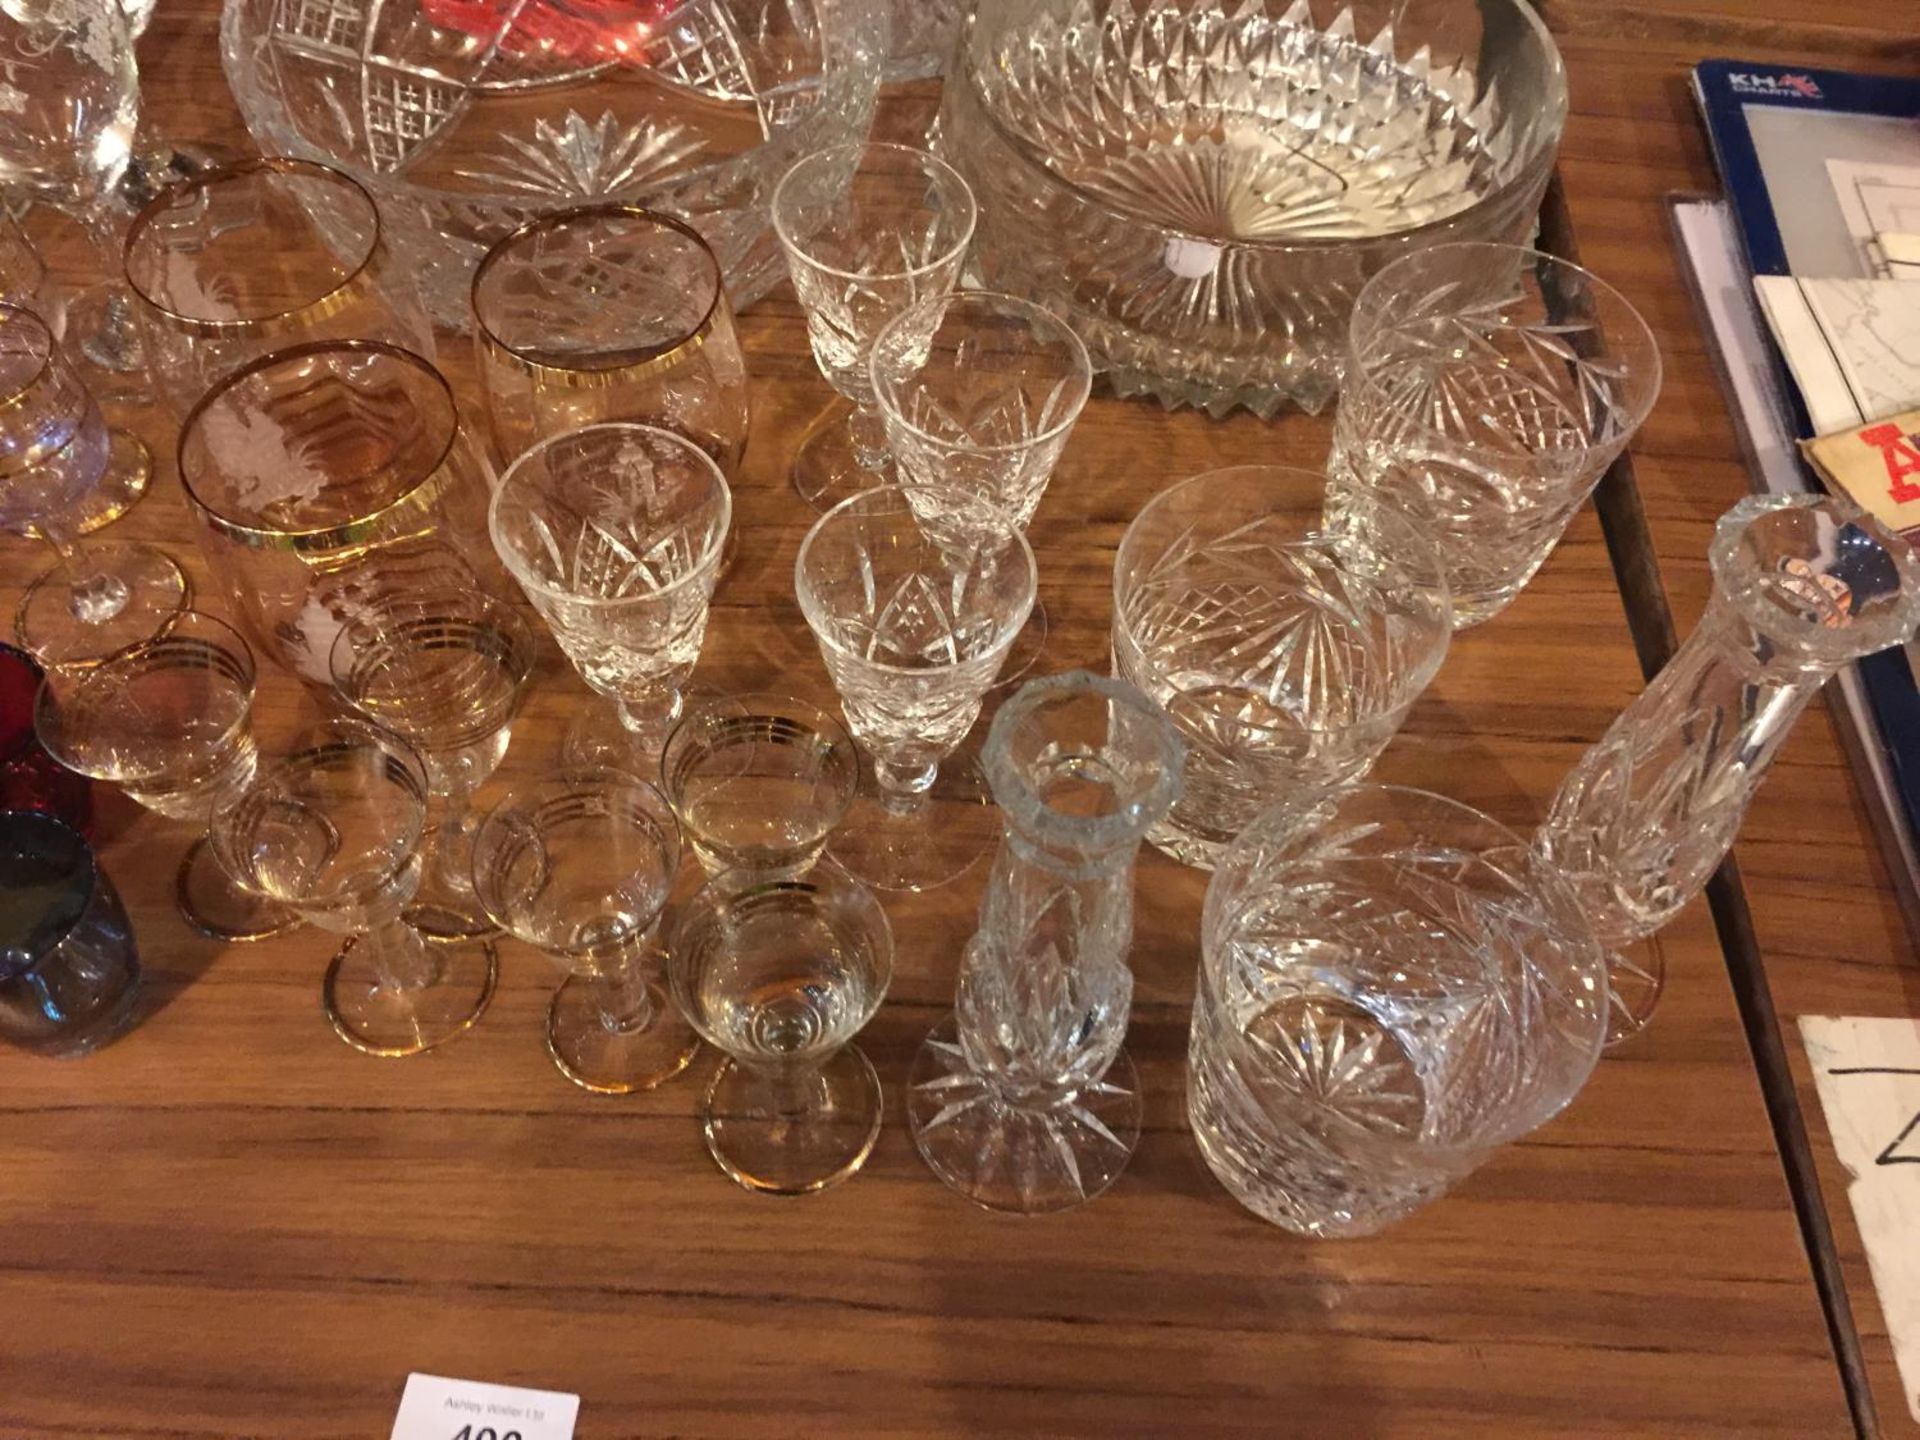 A QUANTITY OF GLASSES TO INCLUDE WINE, SHERRY, LIQUOR, BOWLS, DECANTER, ETC - Image 3 of 4